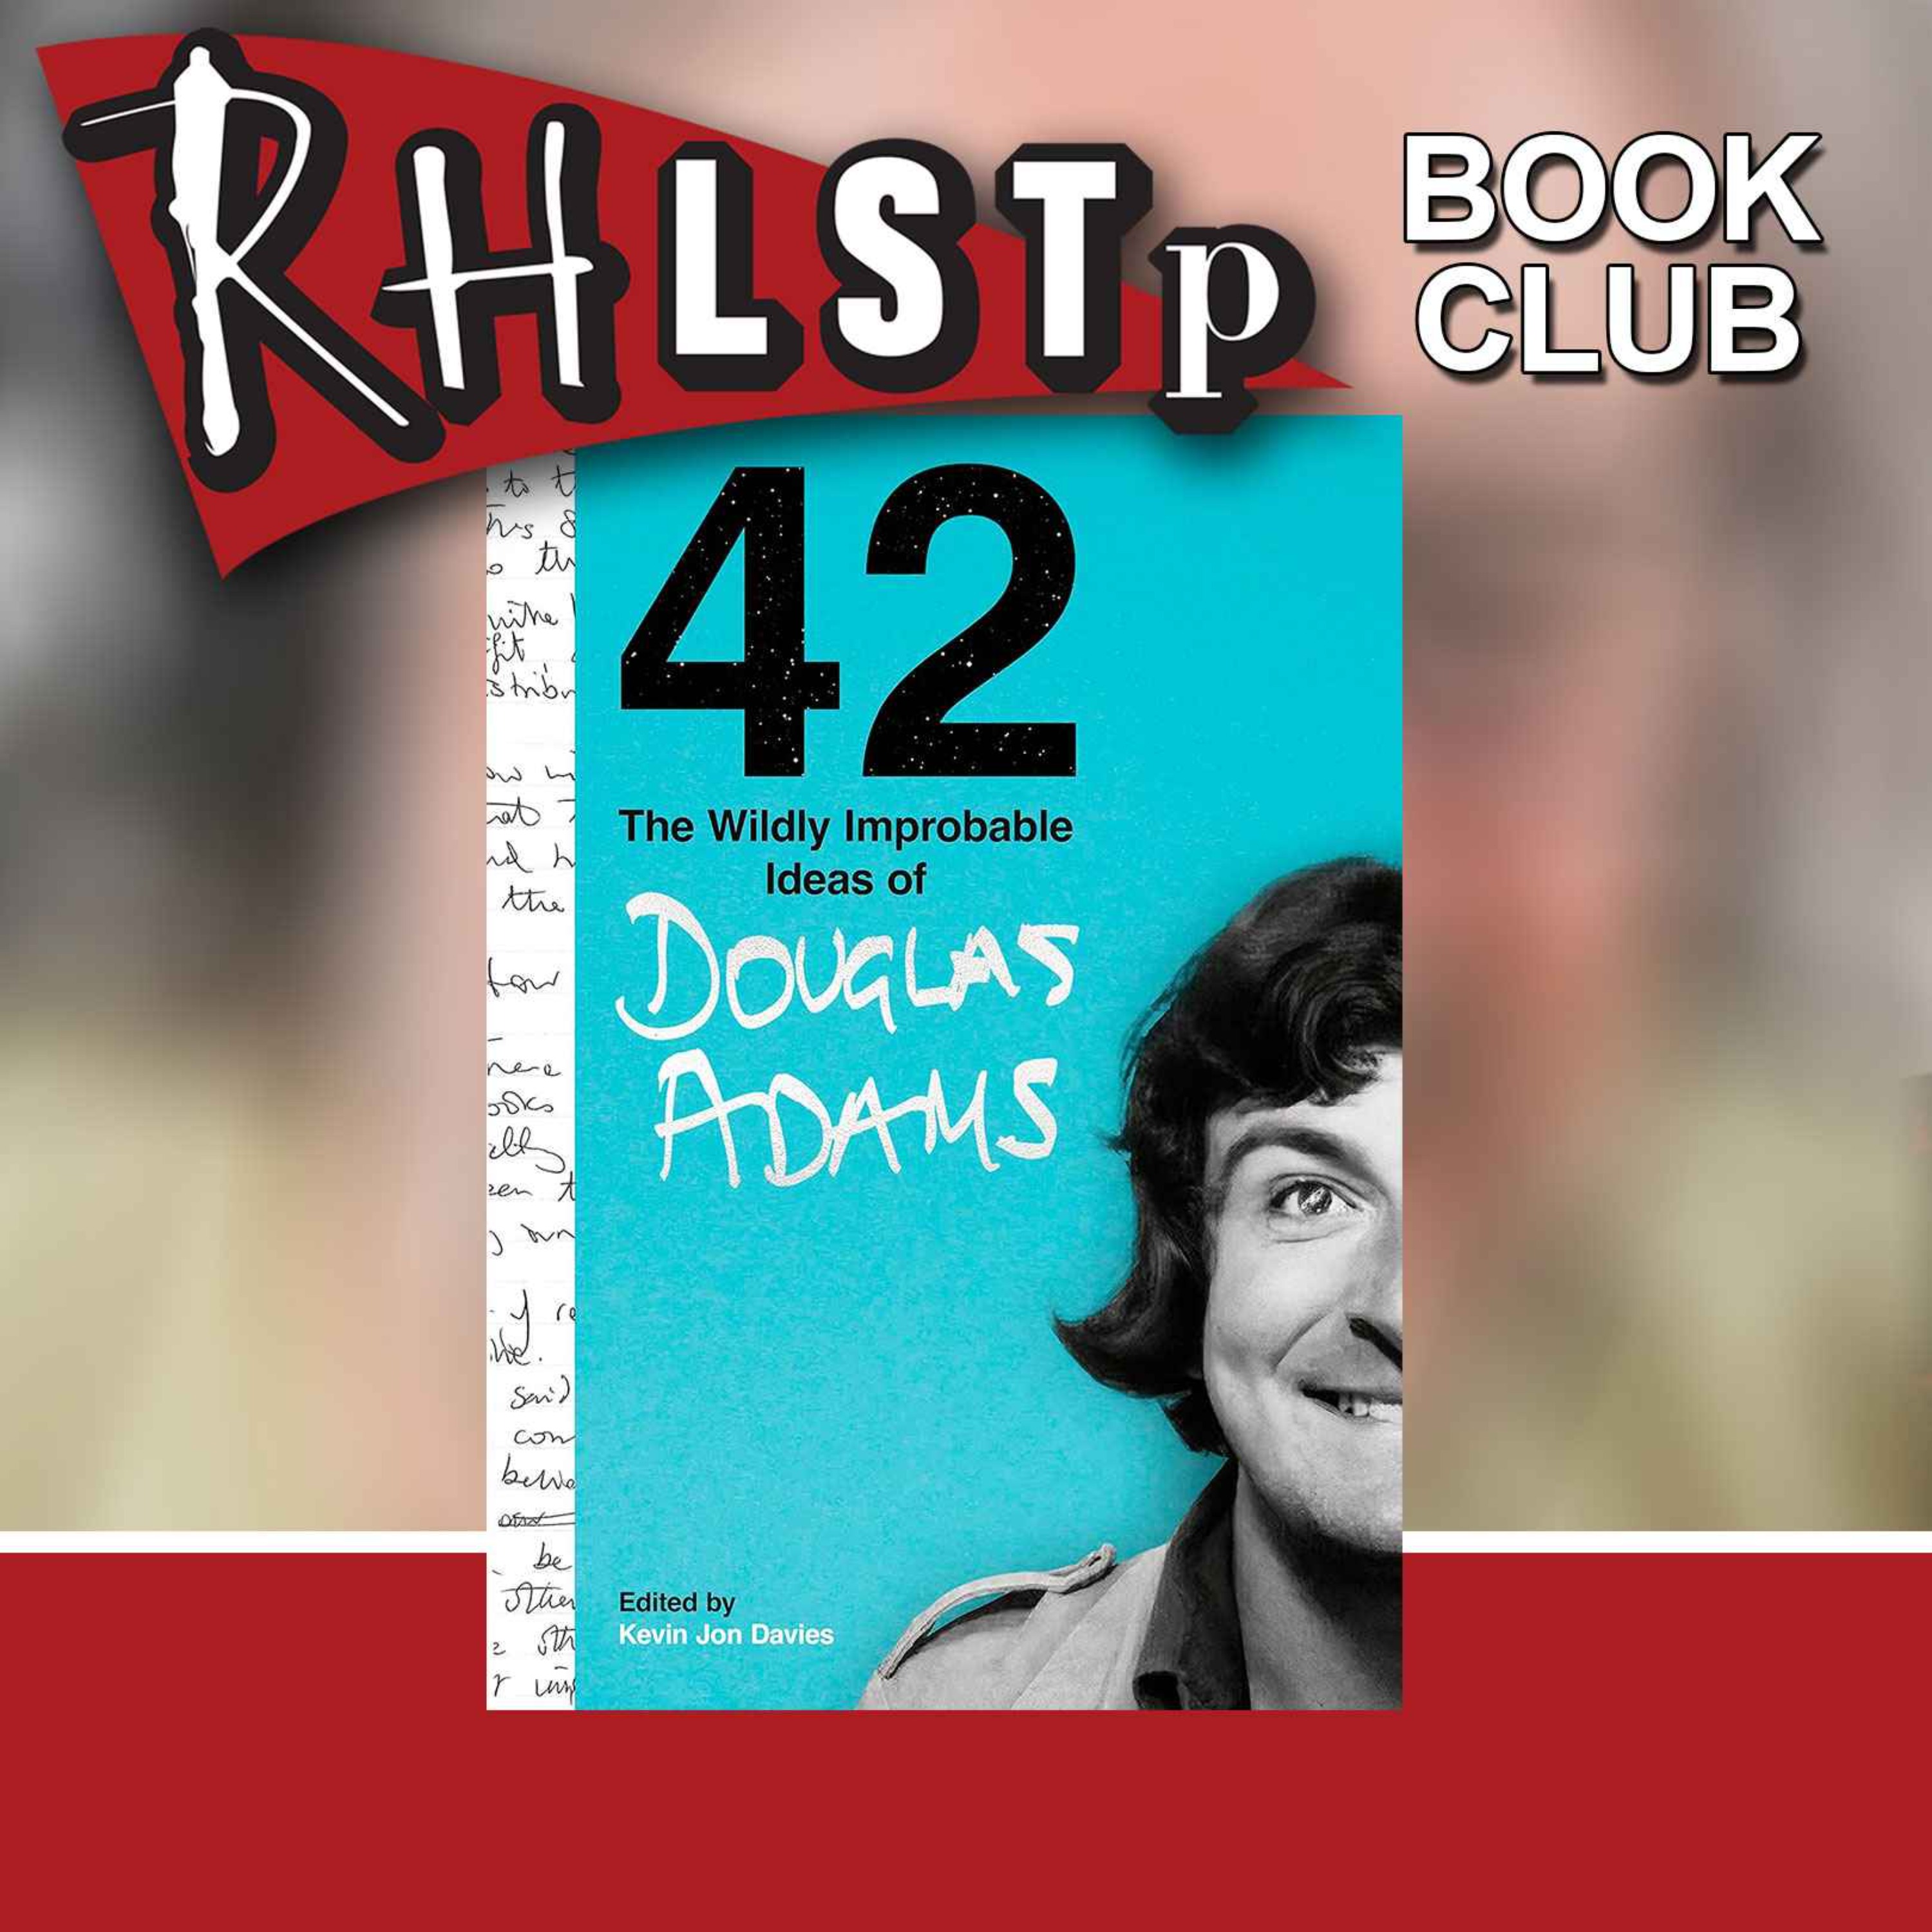 cover art for RHLSTP Book Club 98 - Kevin Jon Davies